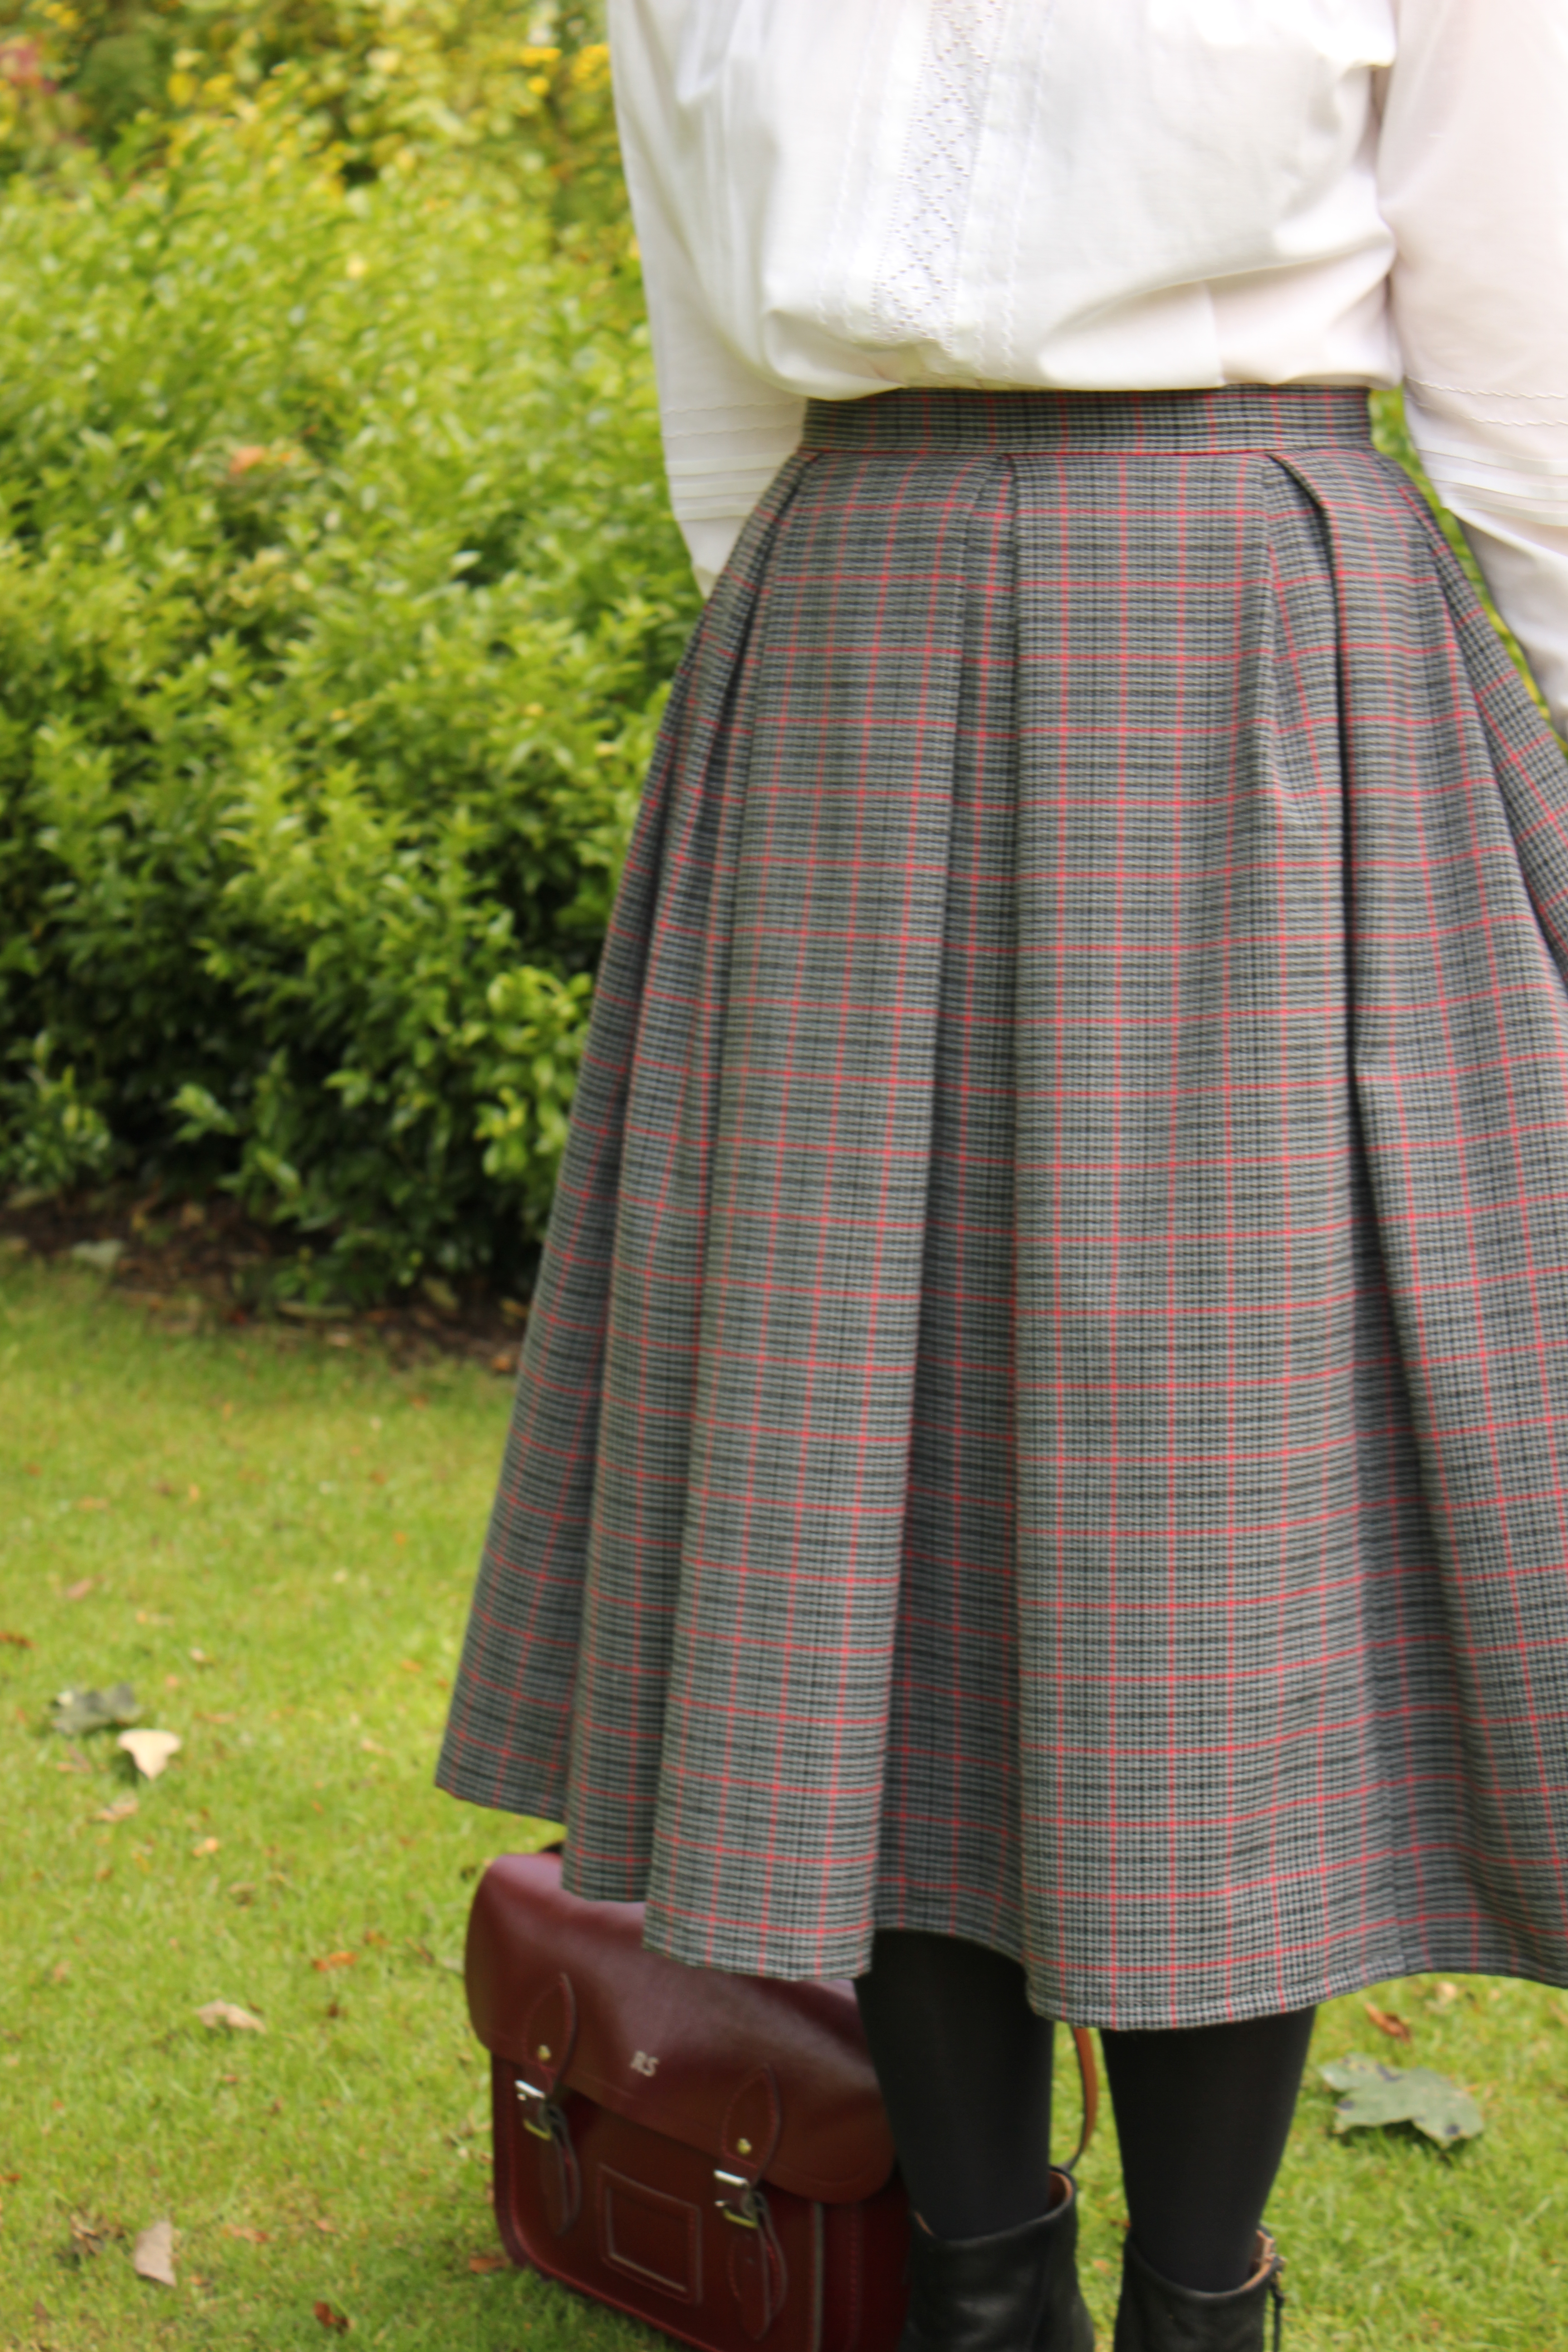 Handmade tweed skirt